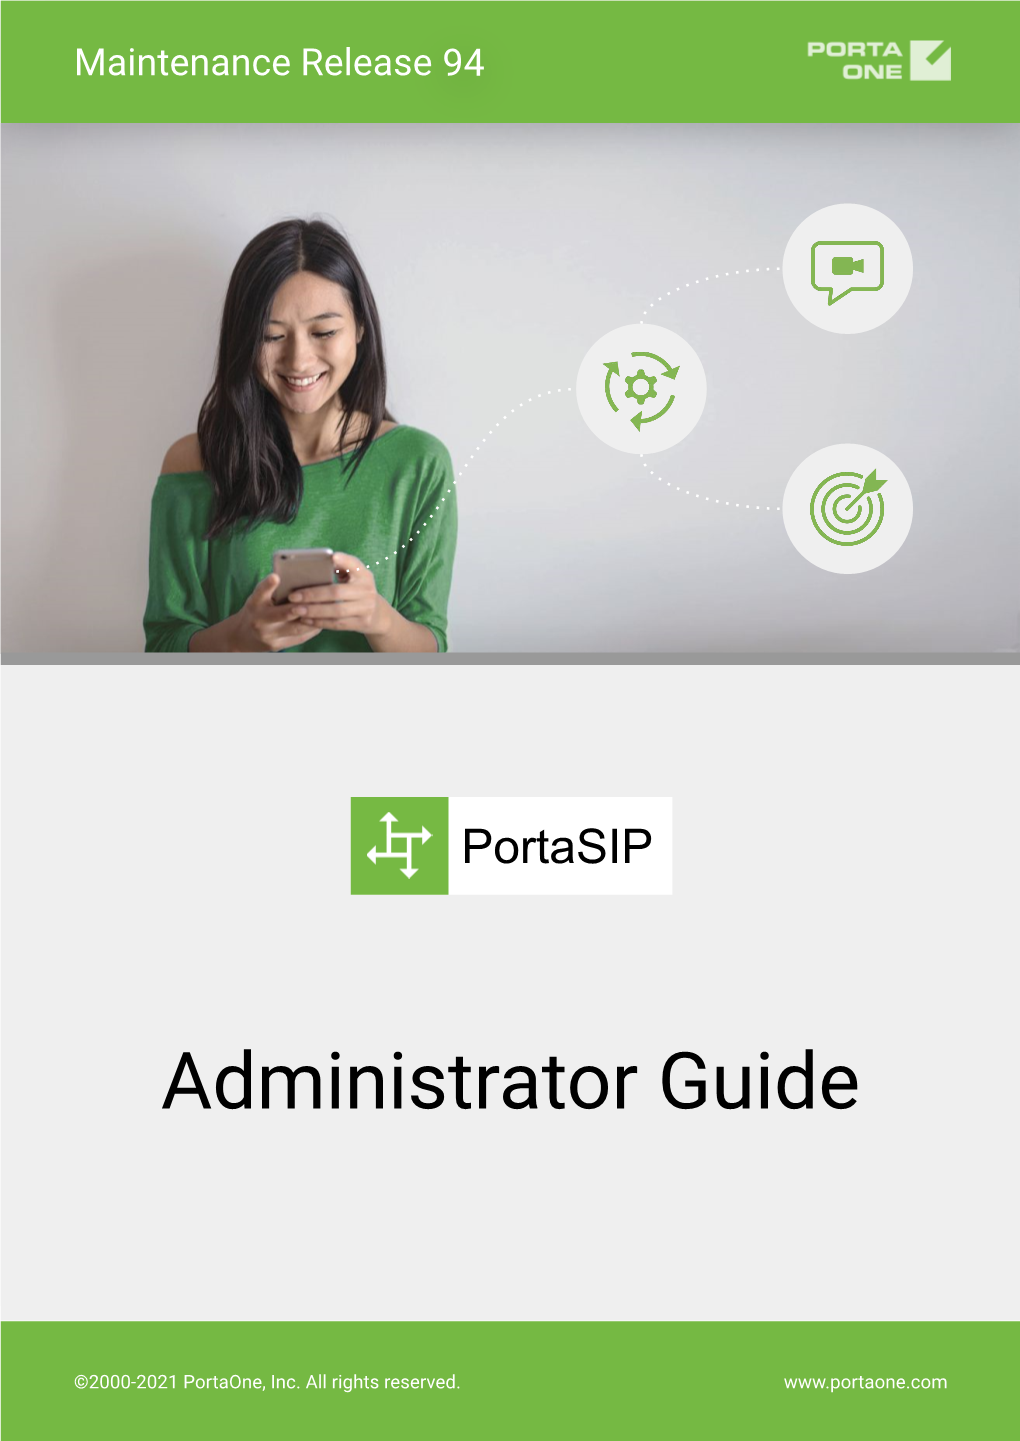 Portasip Administrator Guide MR94